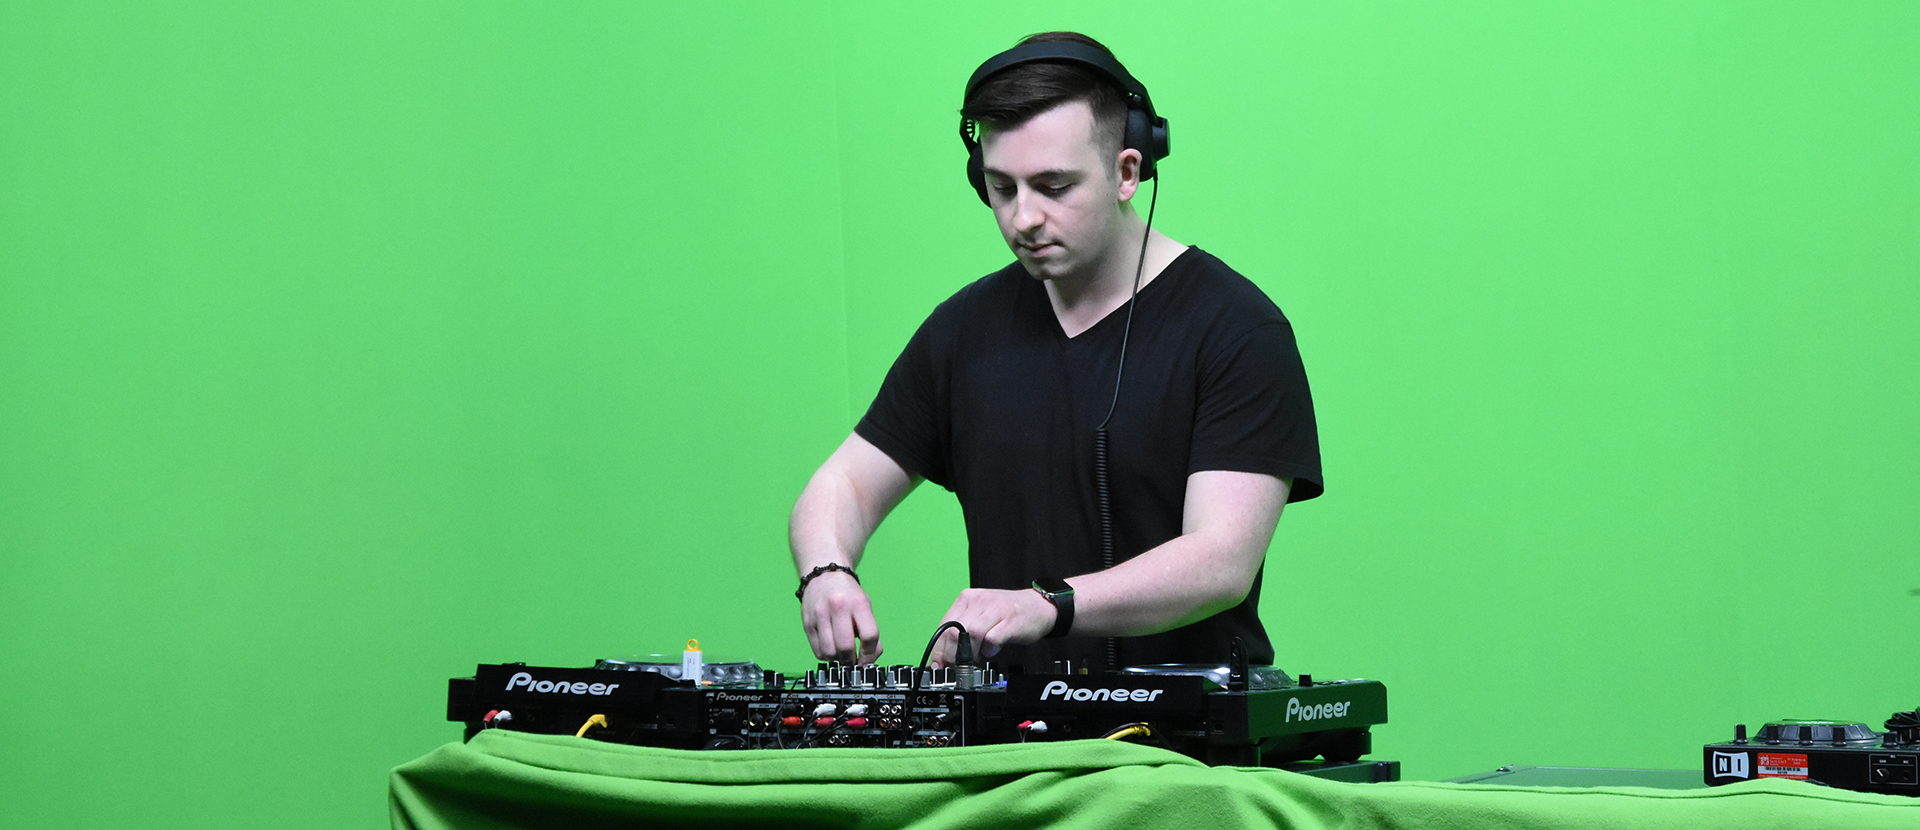 A digital music student DJing